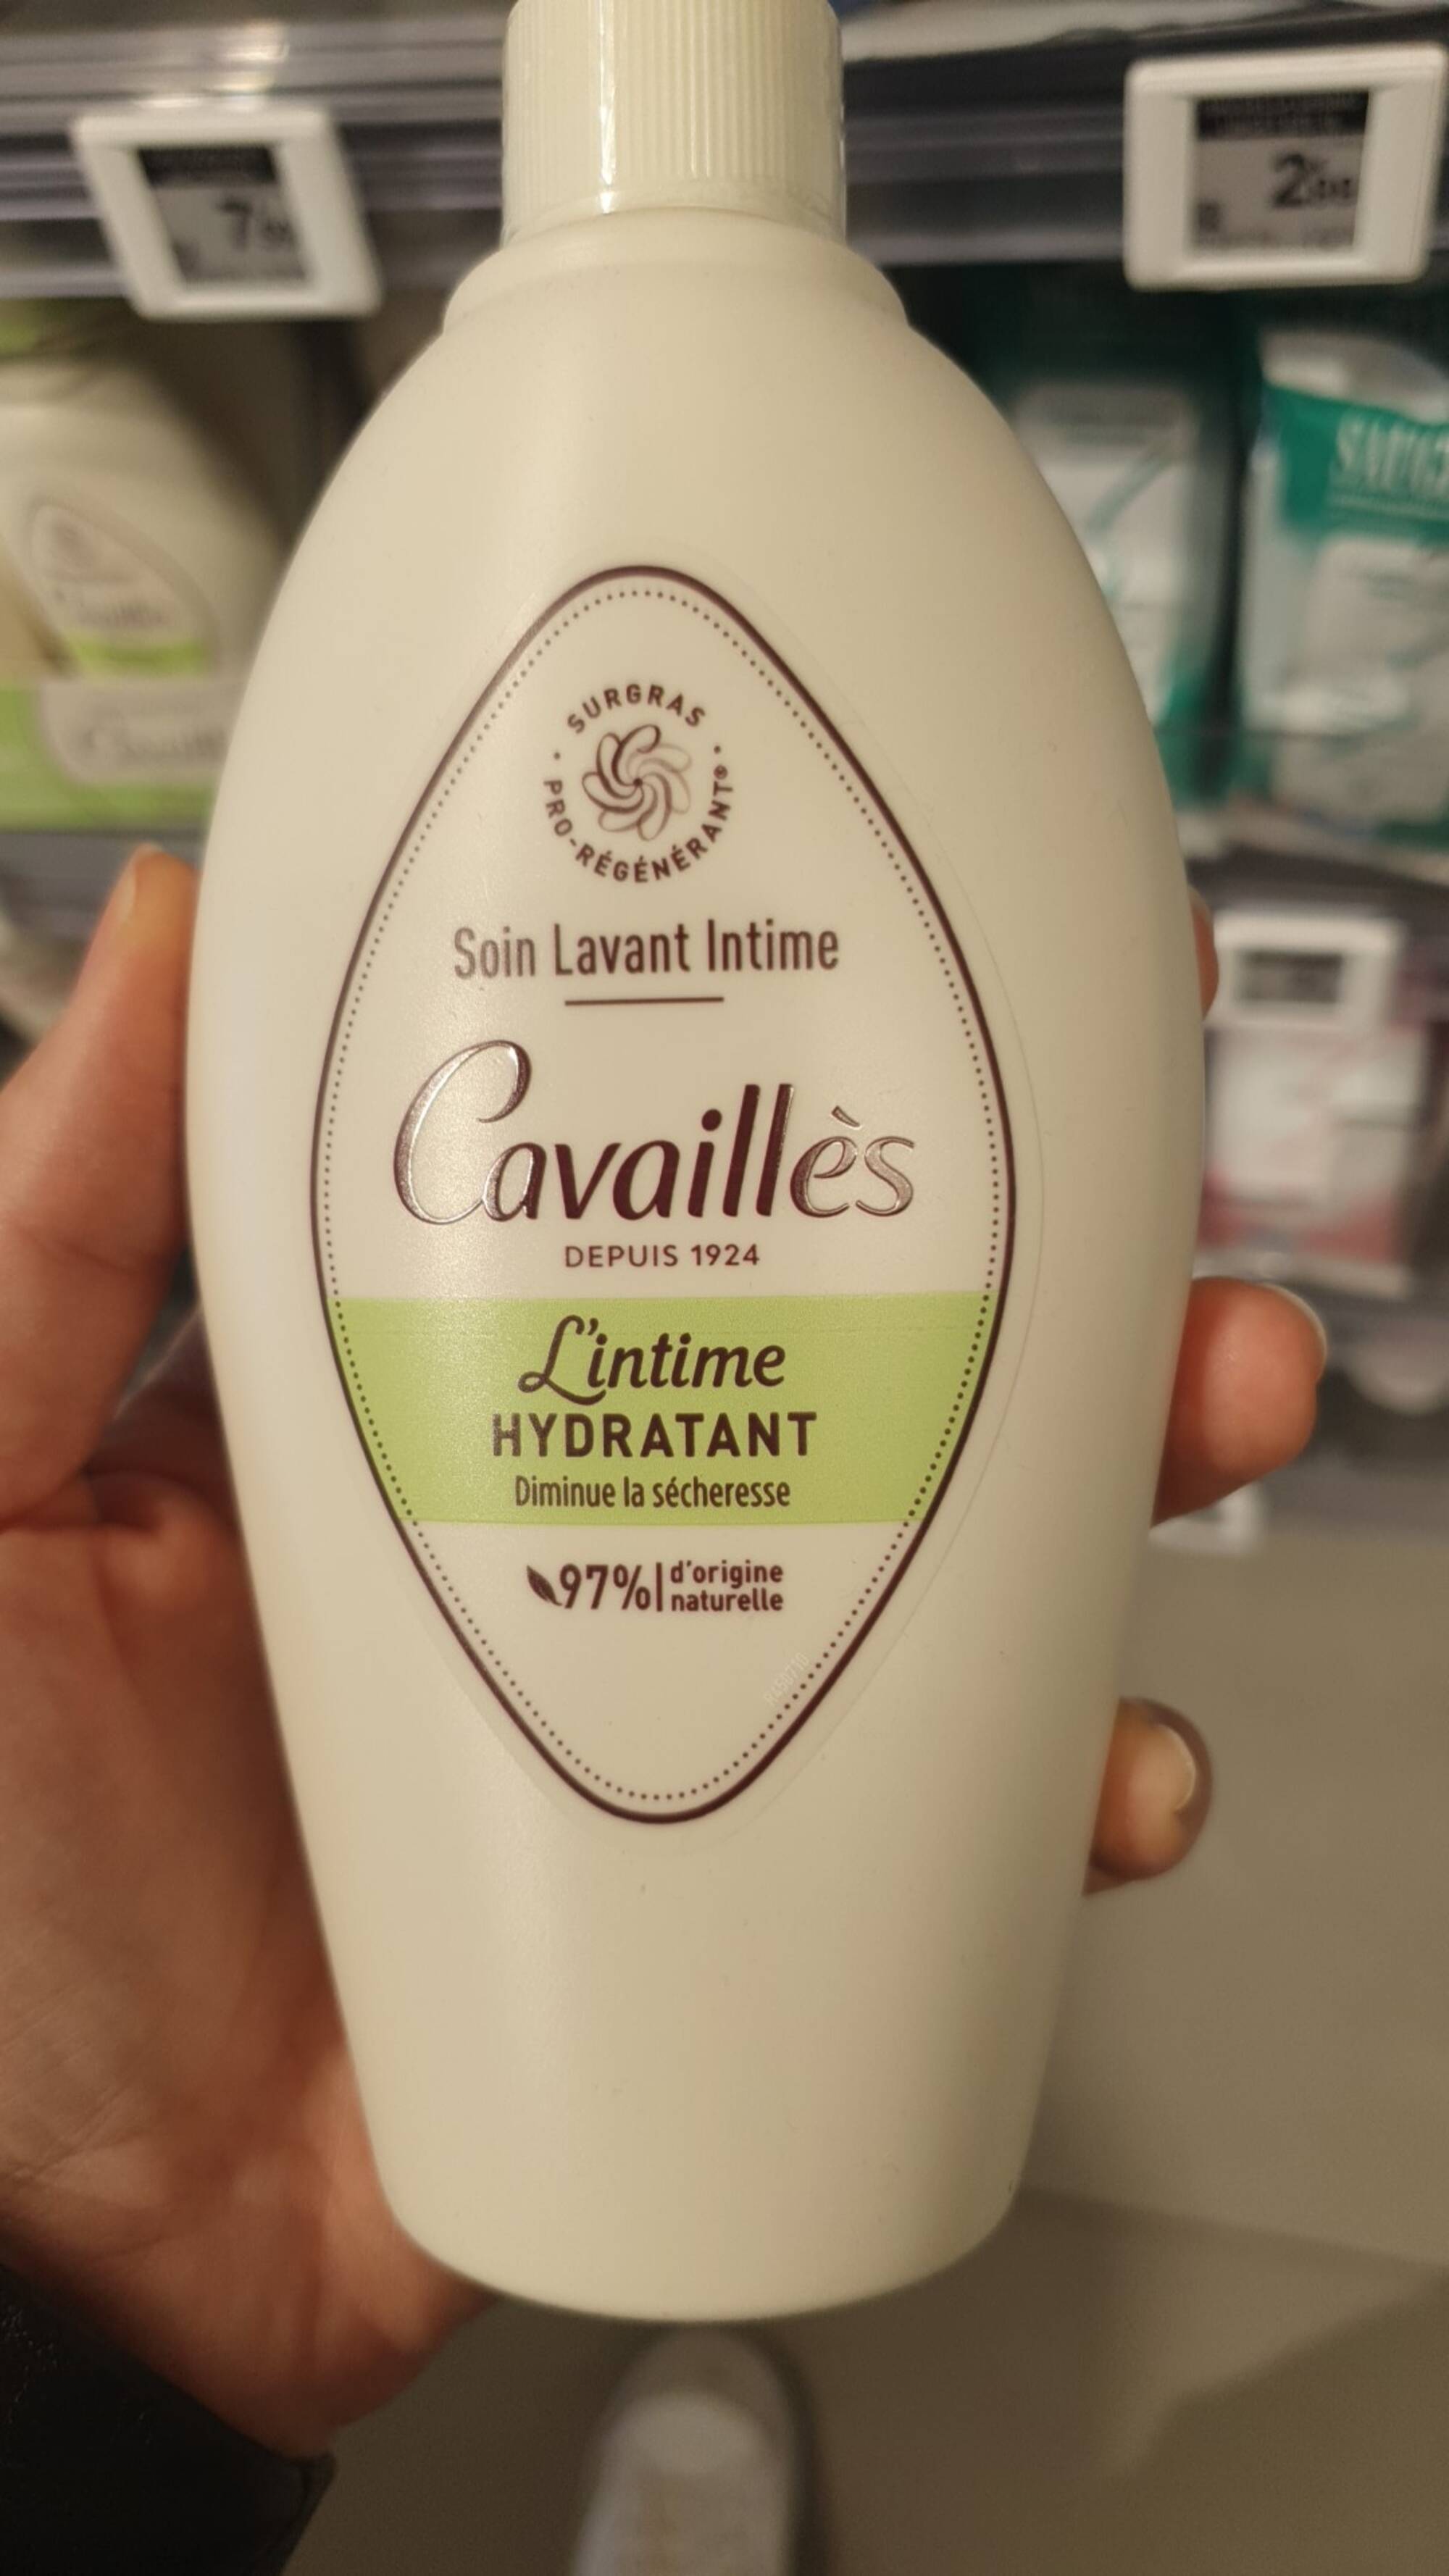 CAVAILLES - Soin lavant intime hydratant